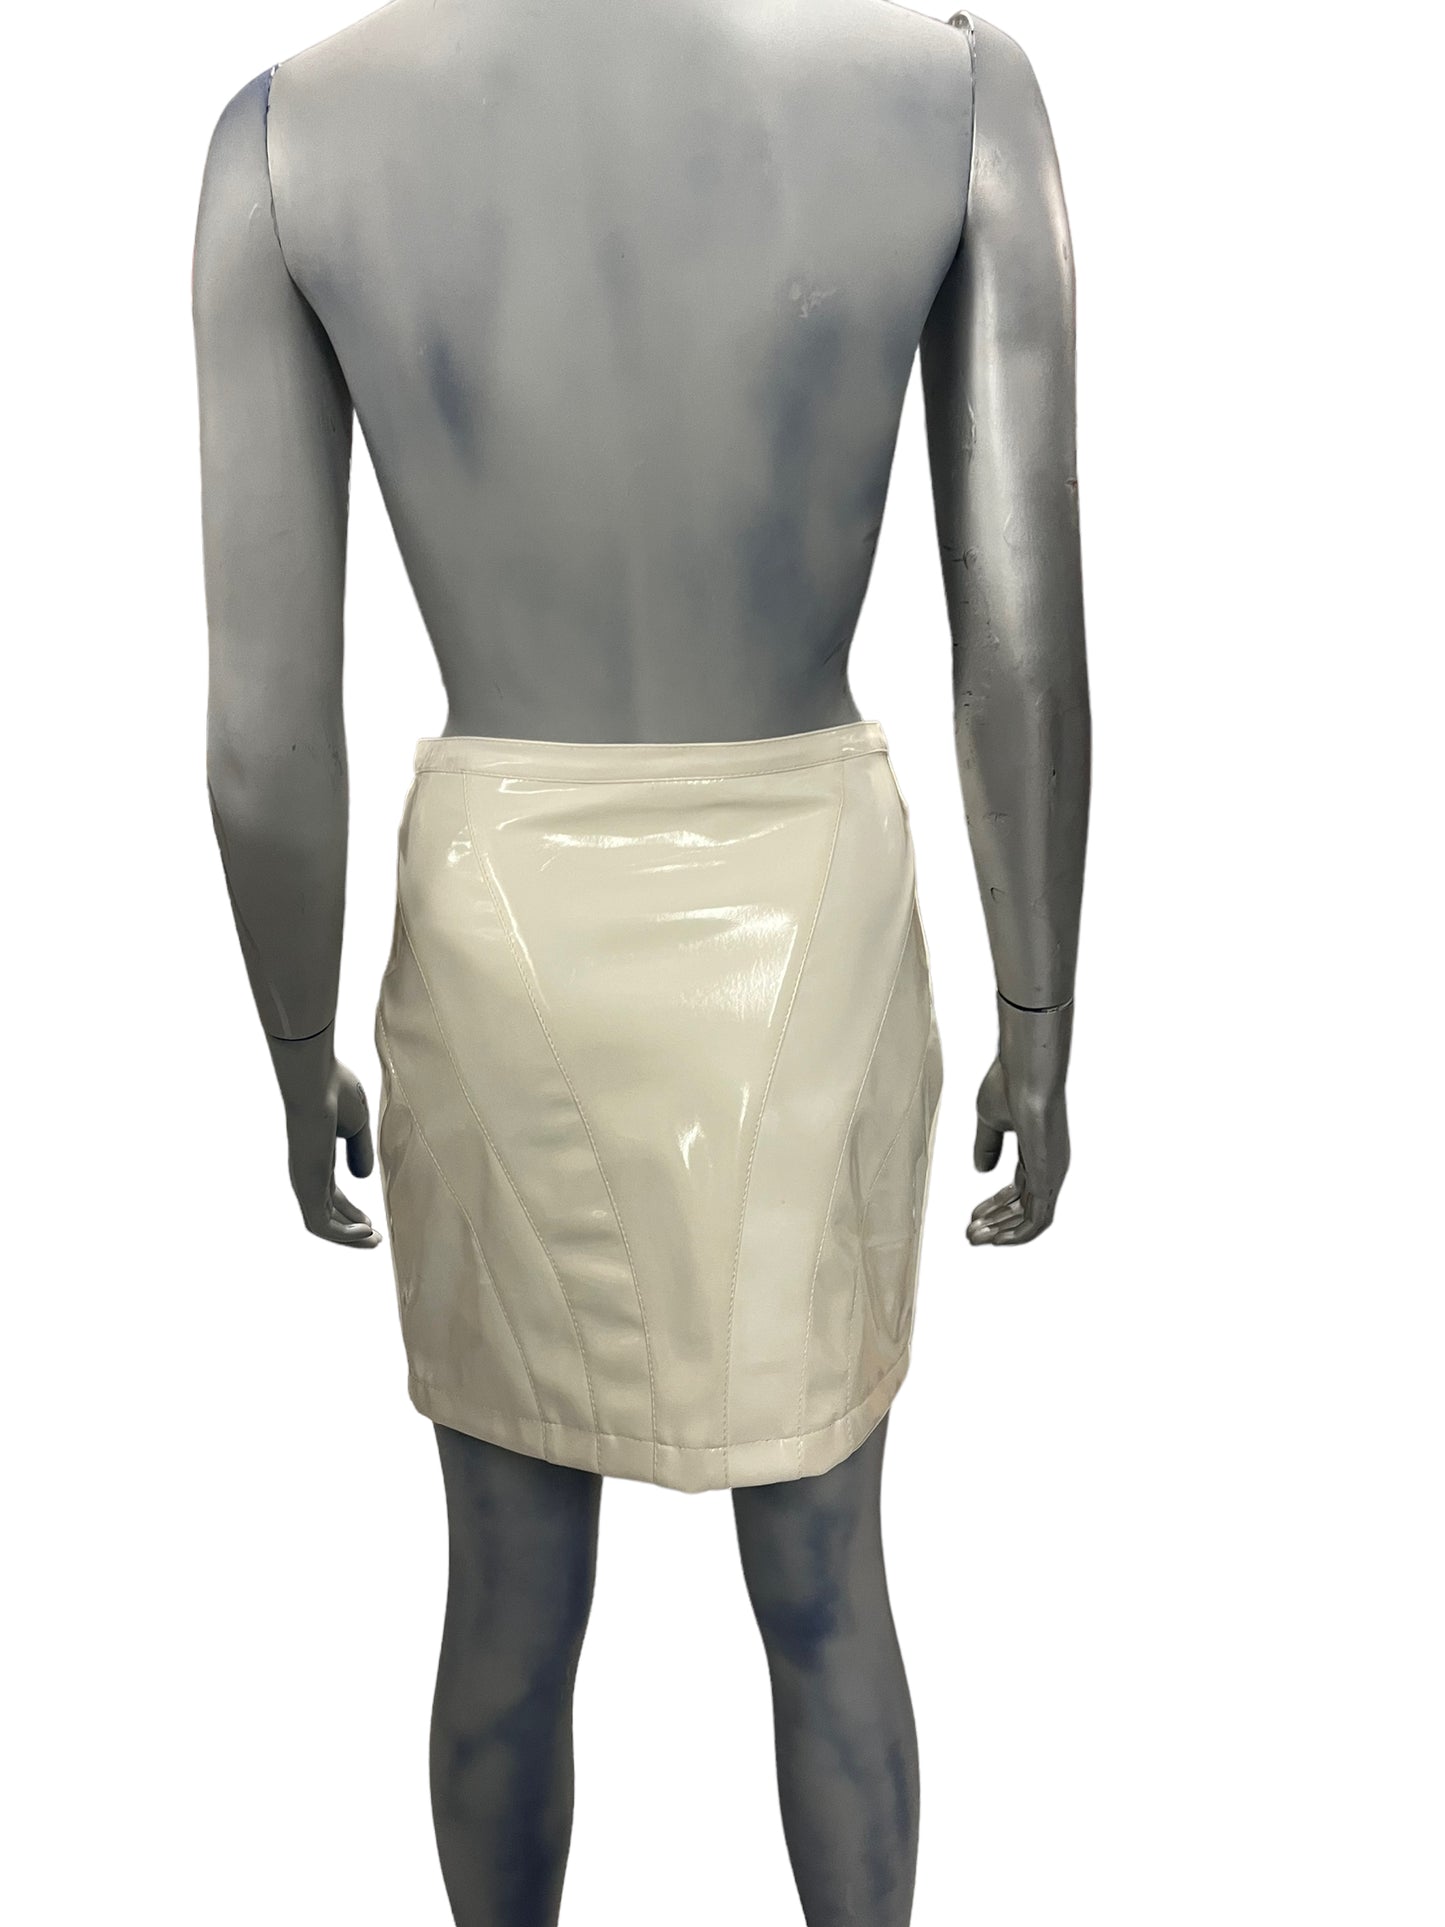 Fashion World - LL128 - White Skirt With Zipper - Size S